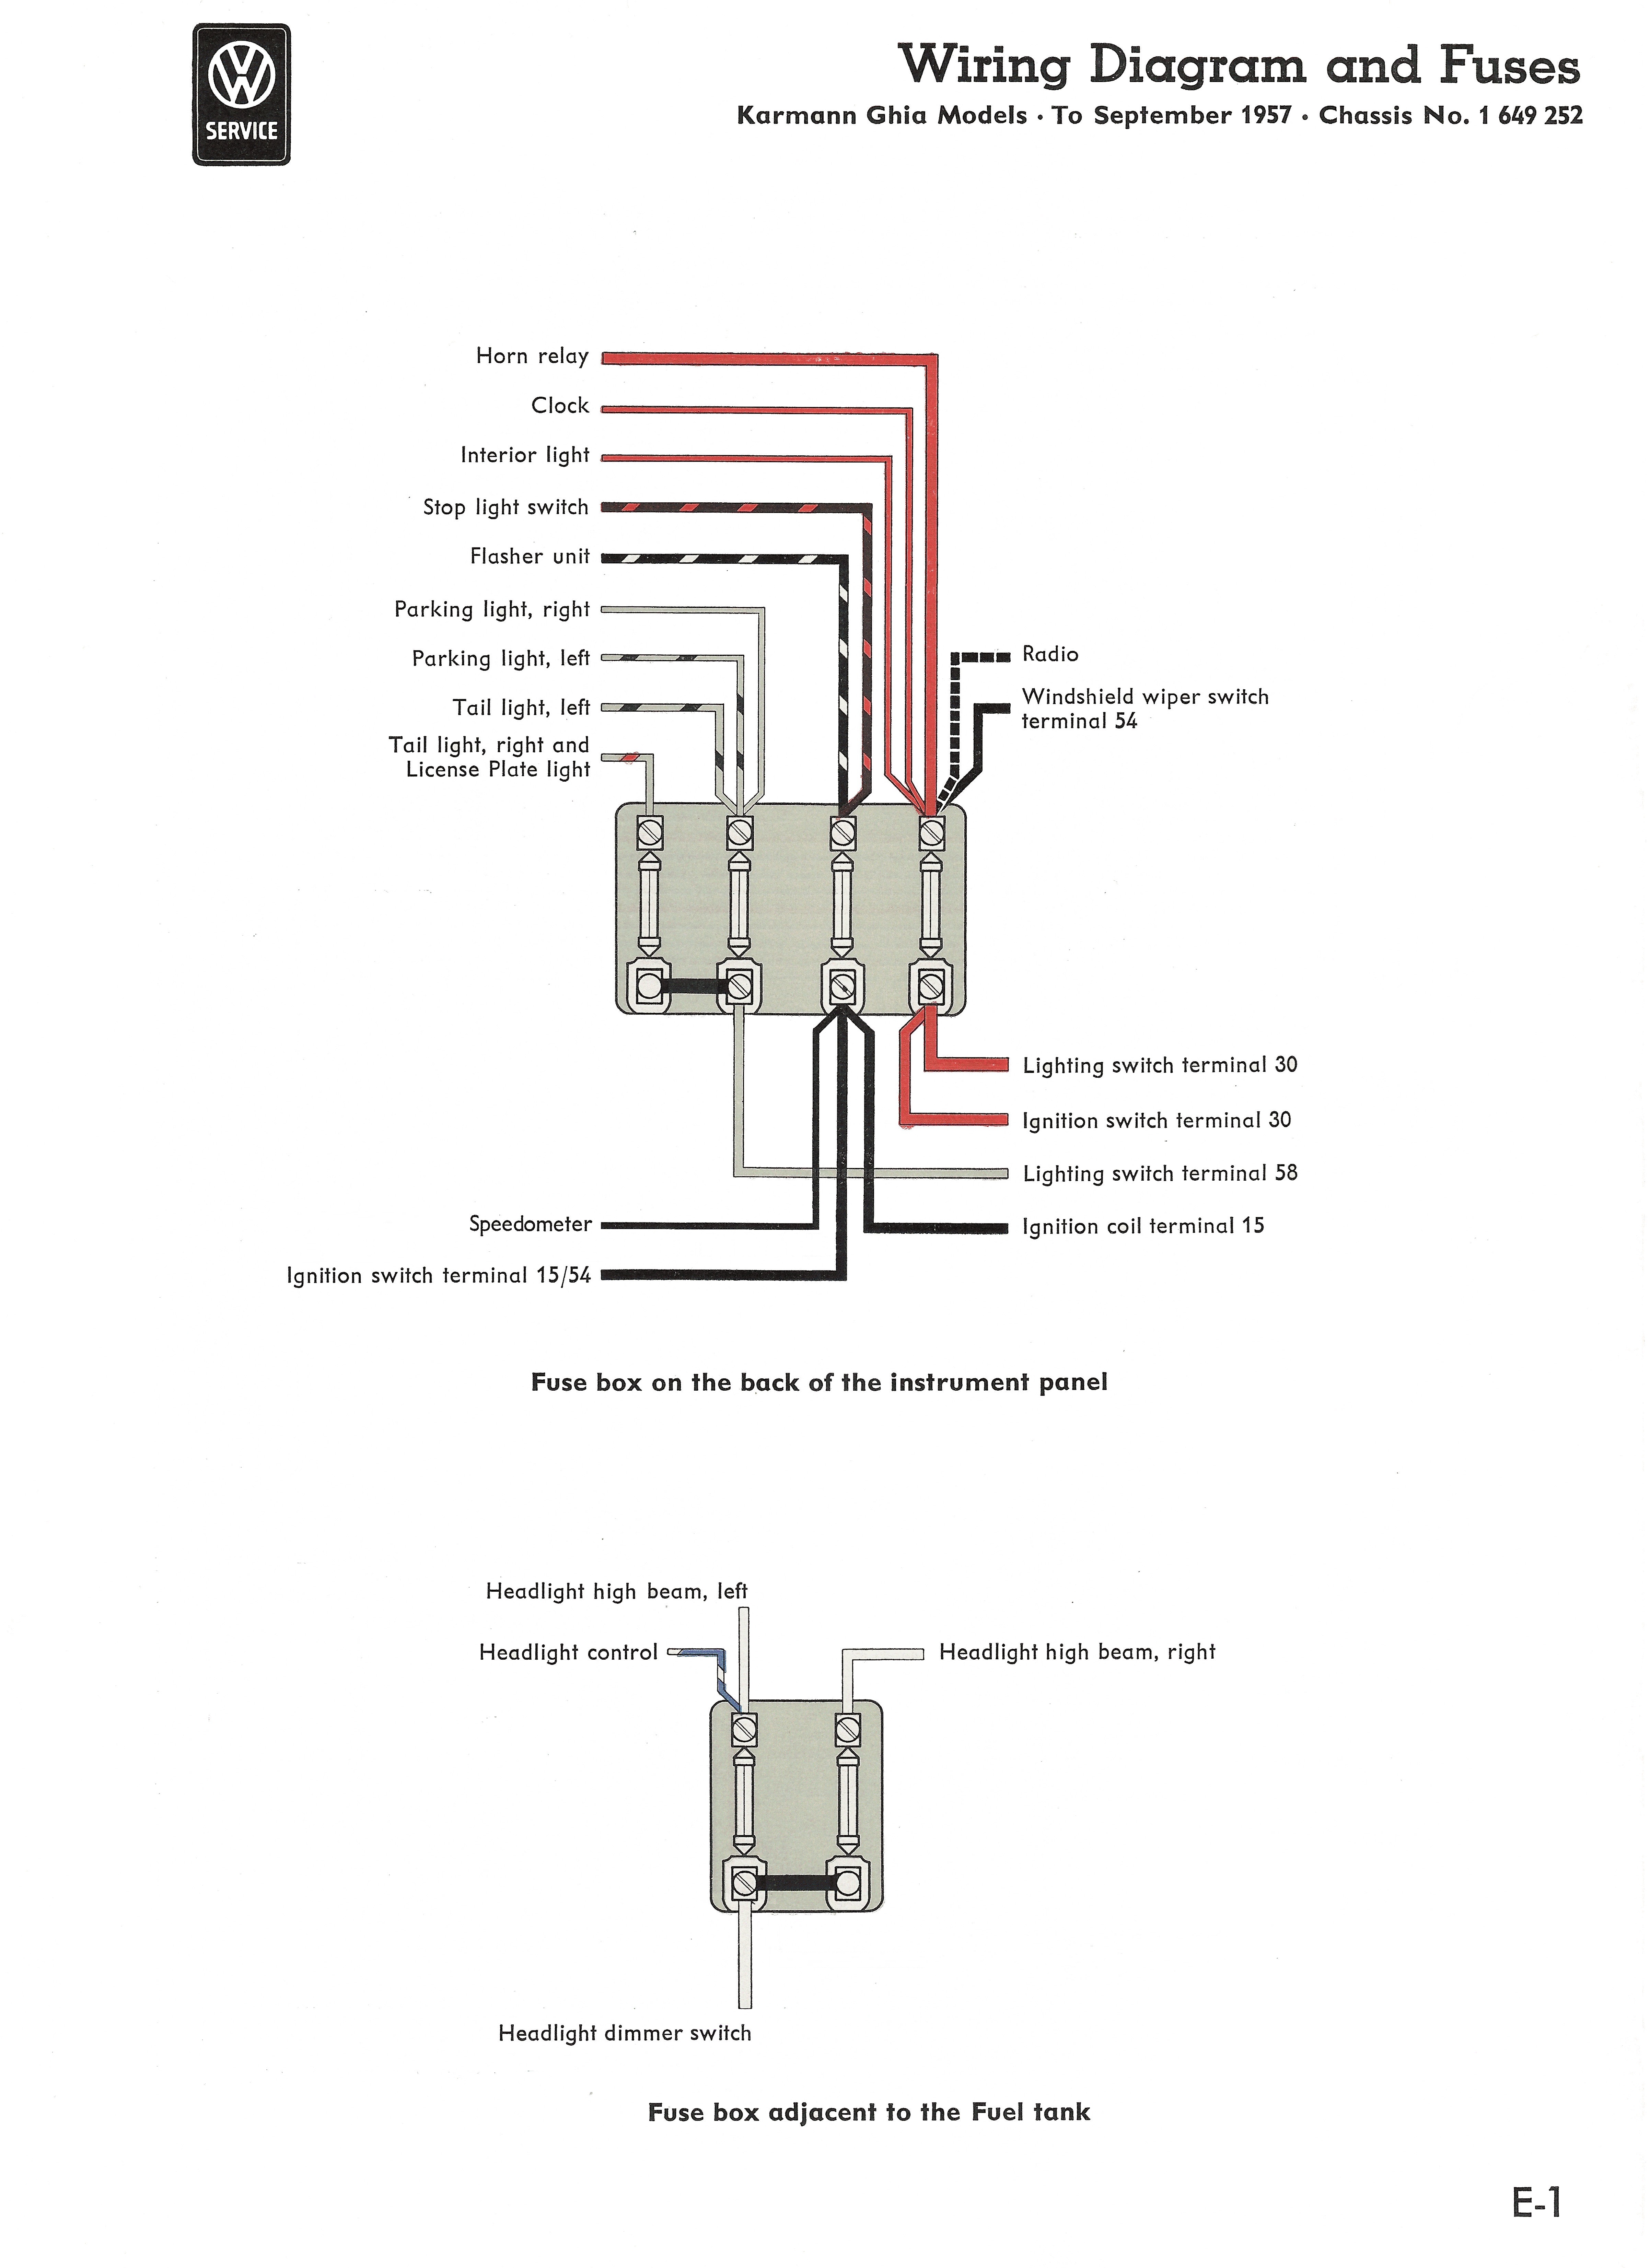 1966 datsun 1600 wiring diagram